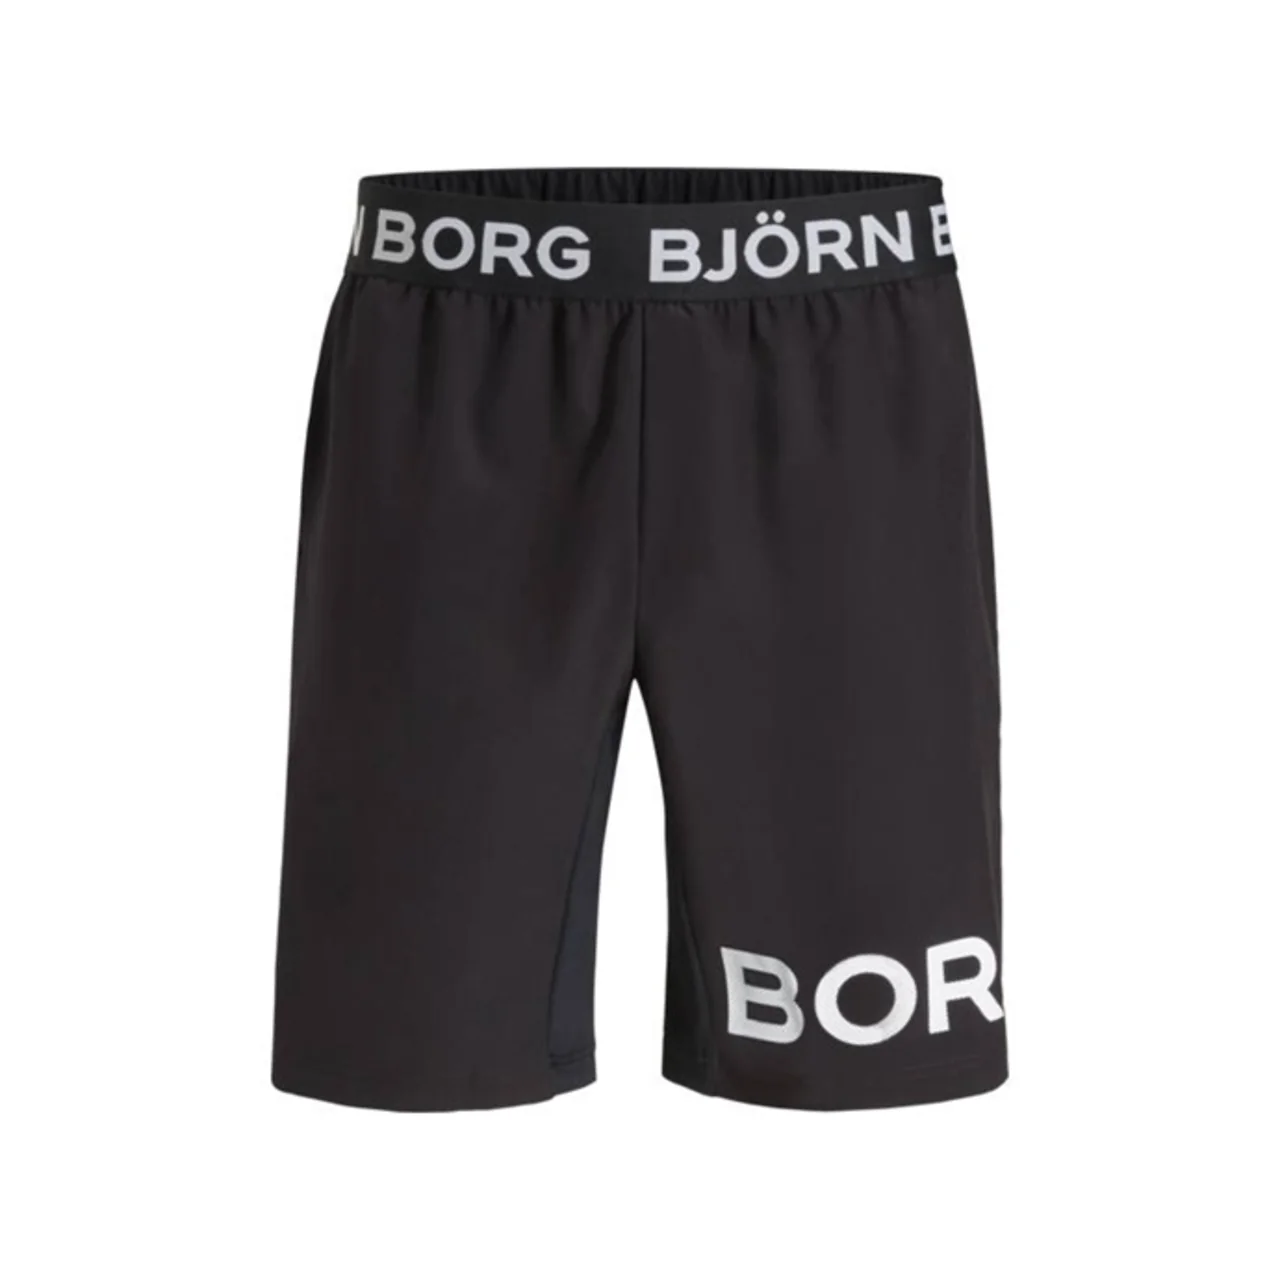 Björn Borg Shorts August/Borg Black